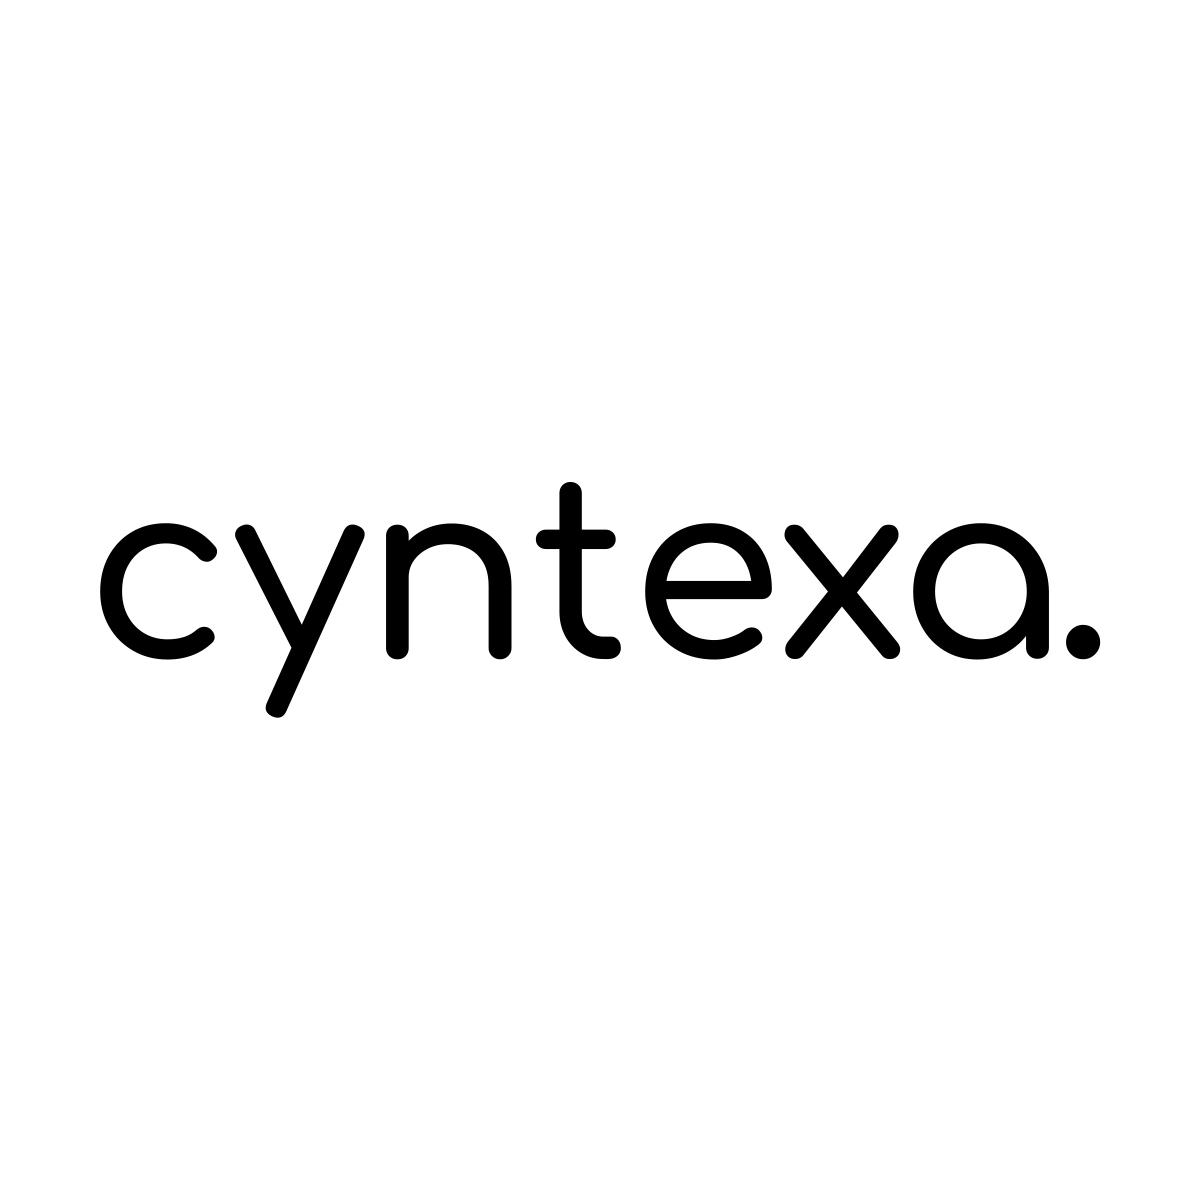 Cyntexa Labs Pvt Ltd in Elioplus